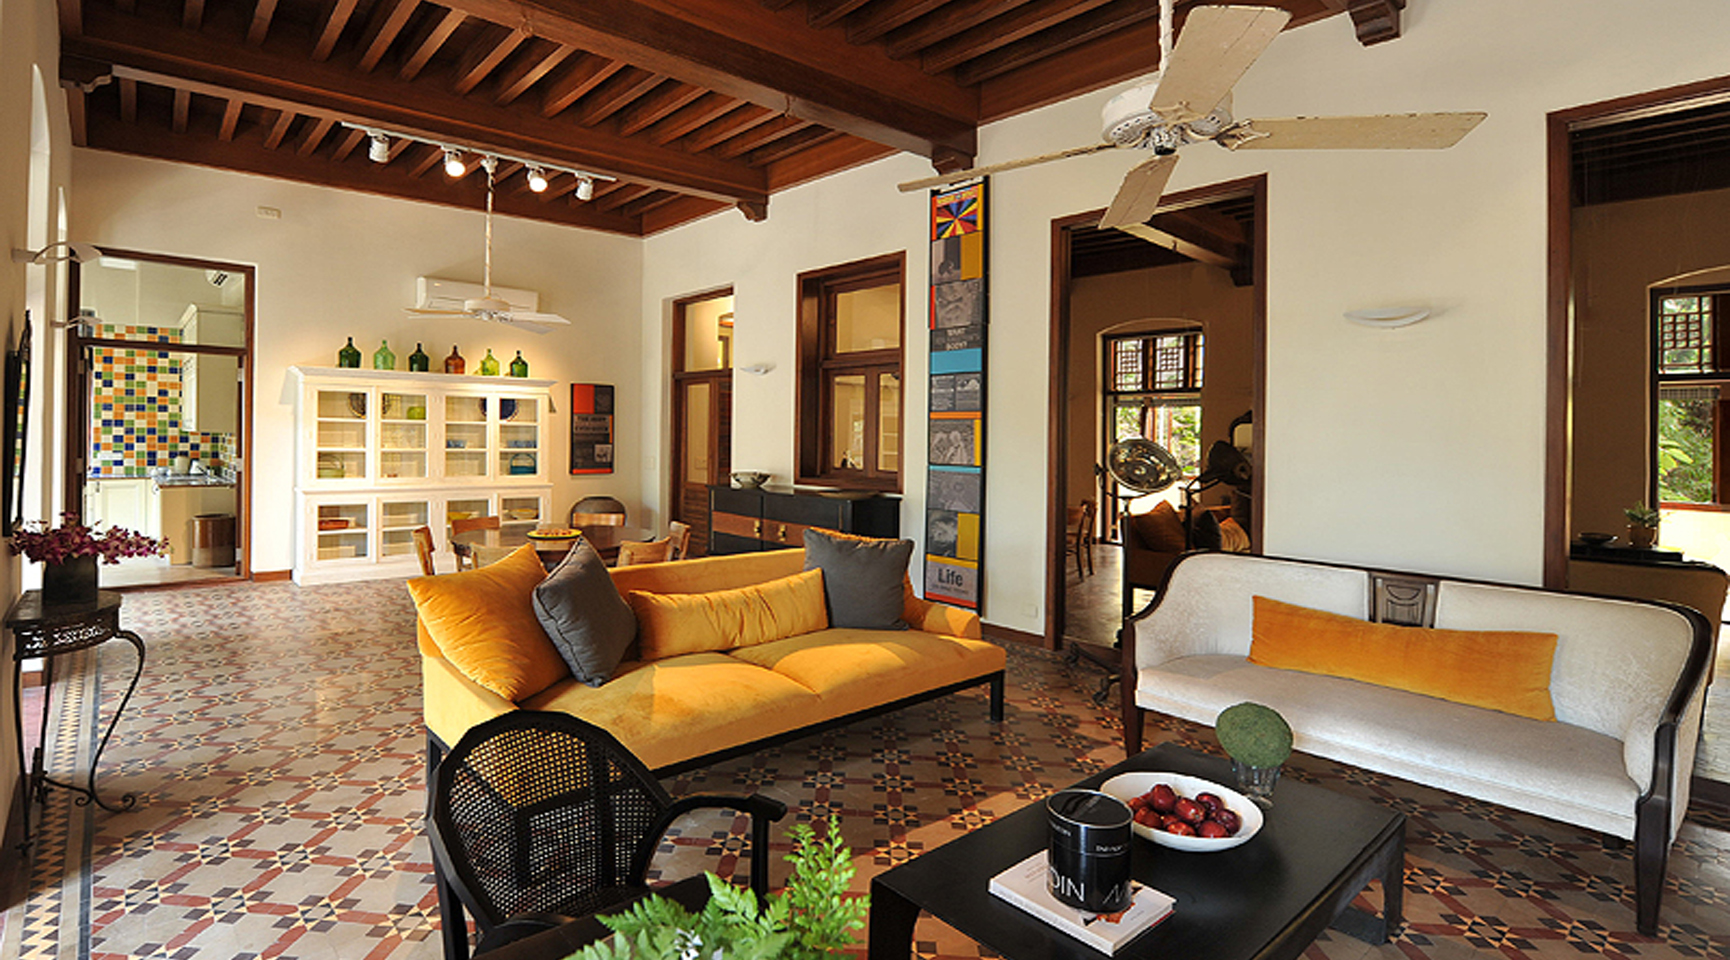  Best Home Interior Design In Kerala Information